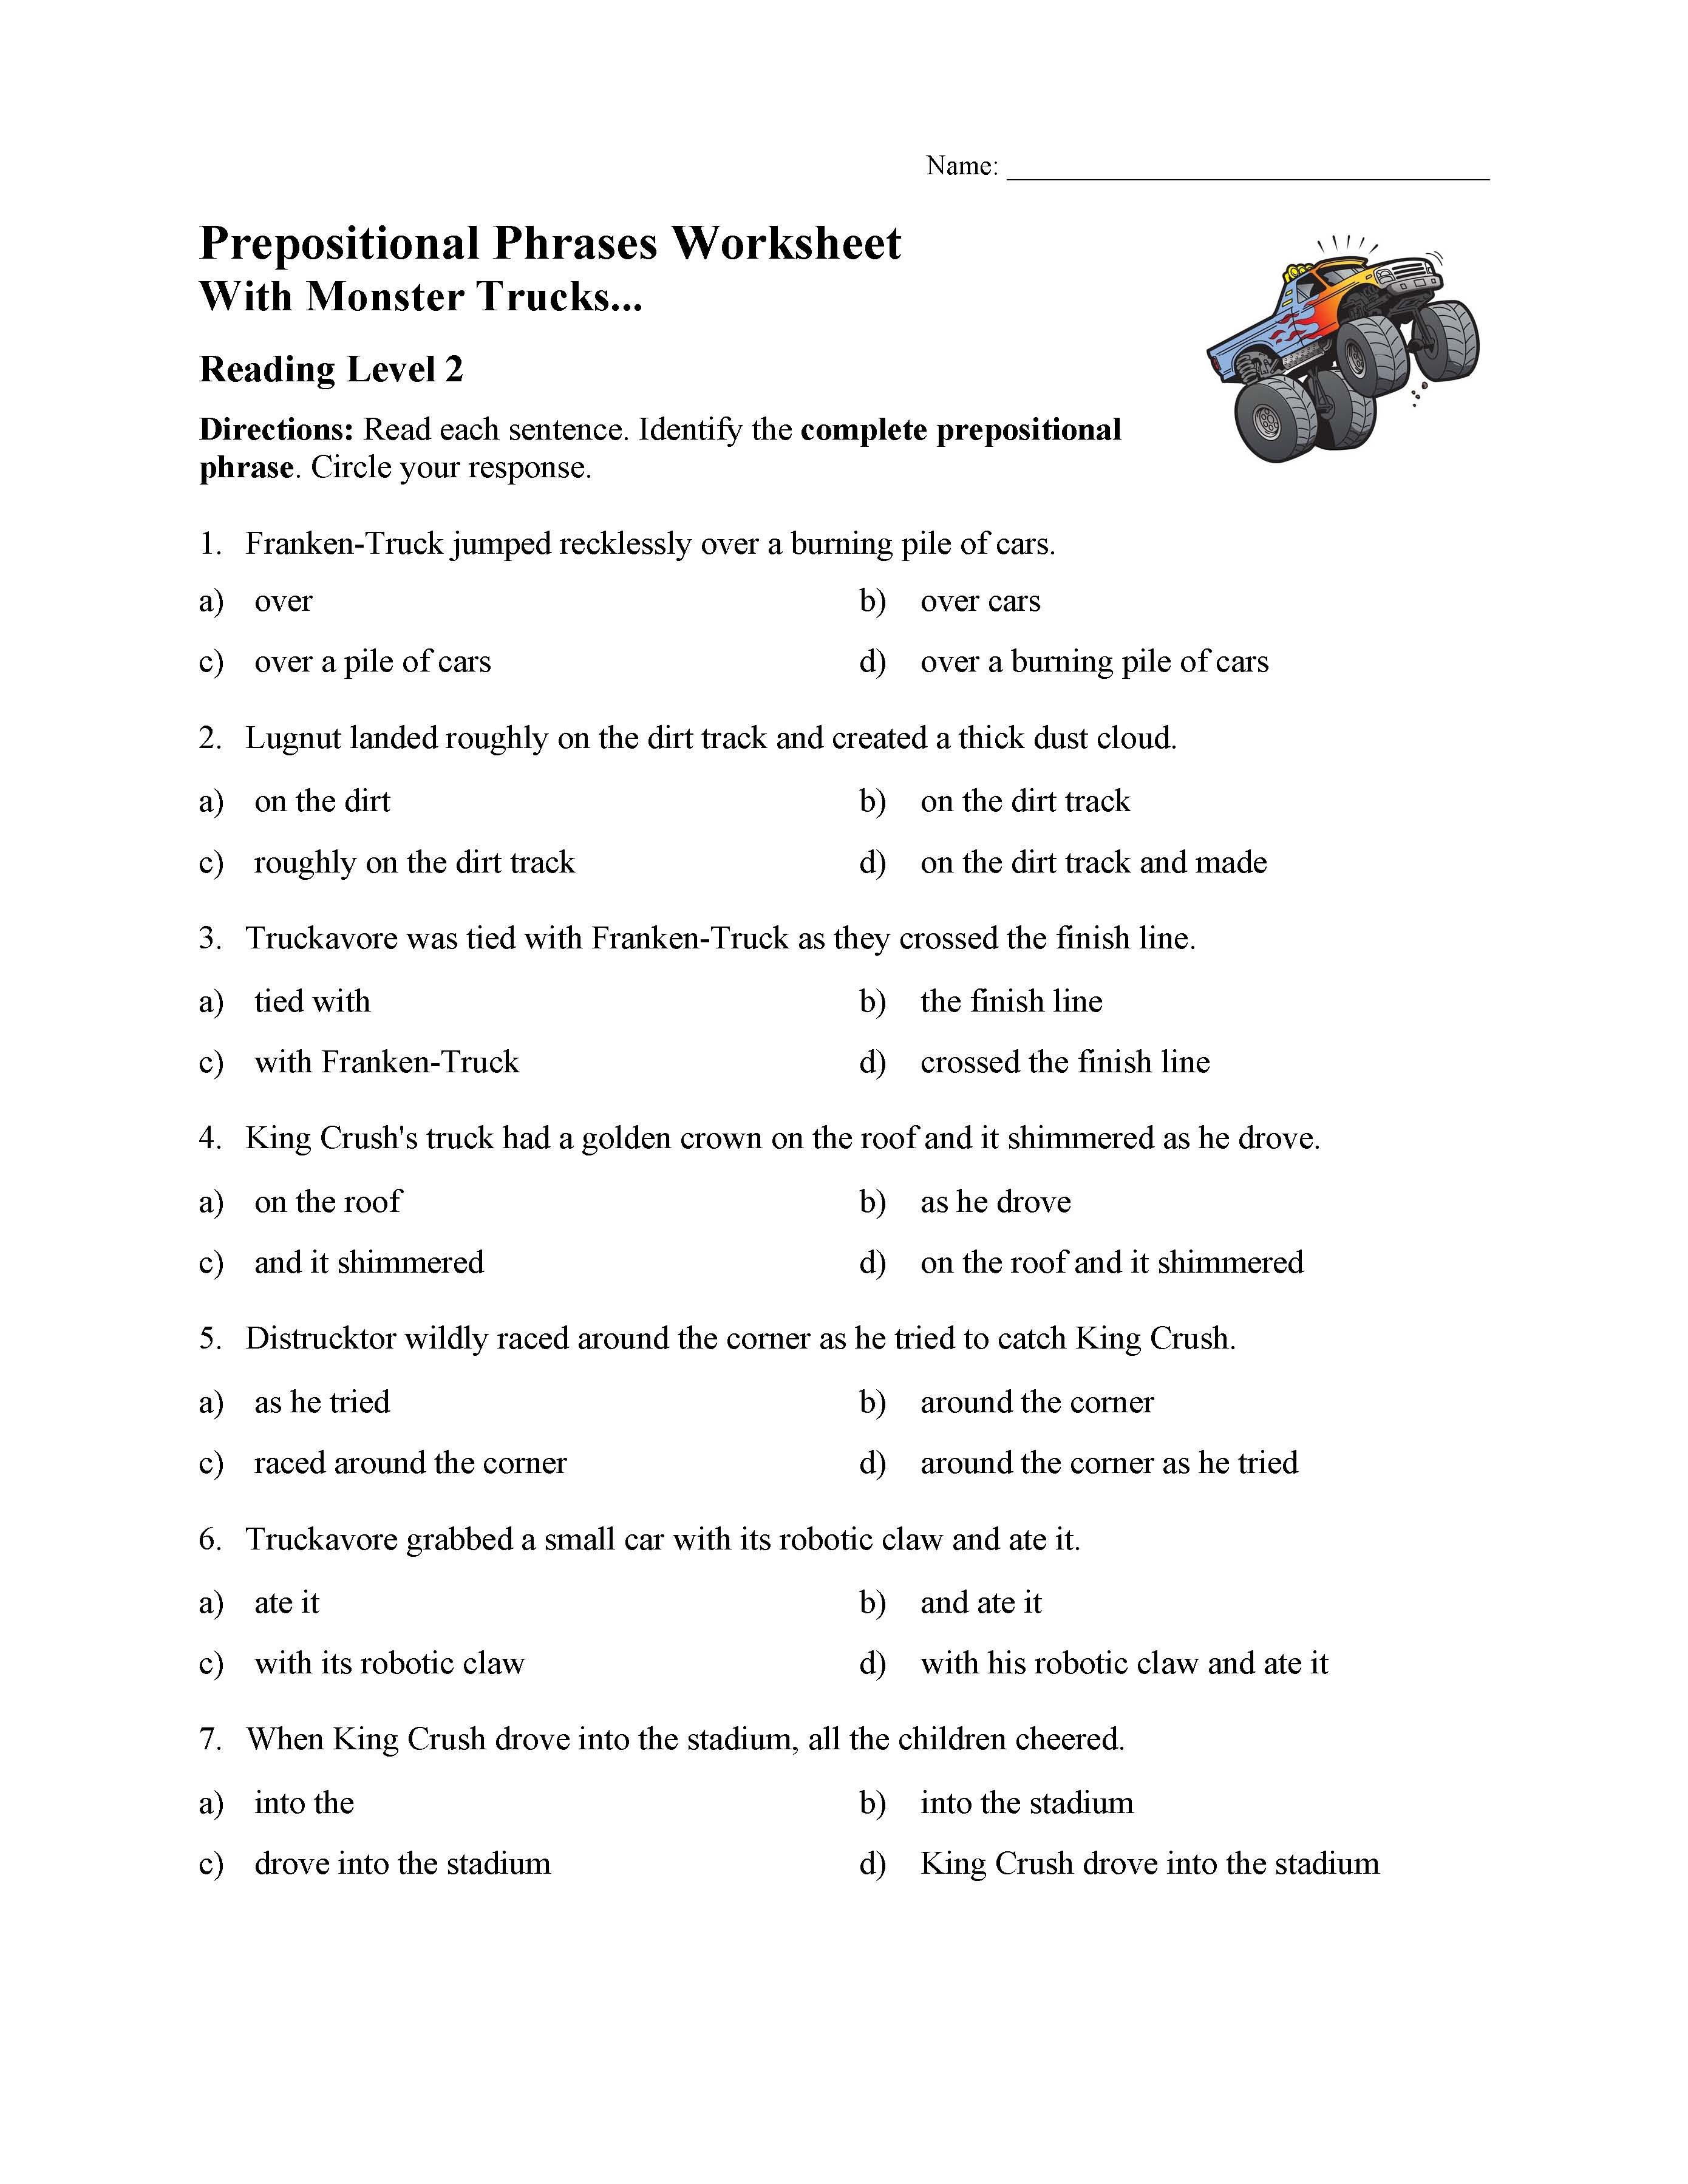 preposition-worksheet-for-6th-grade-pictures-small-letter-worksheet